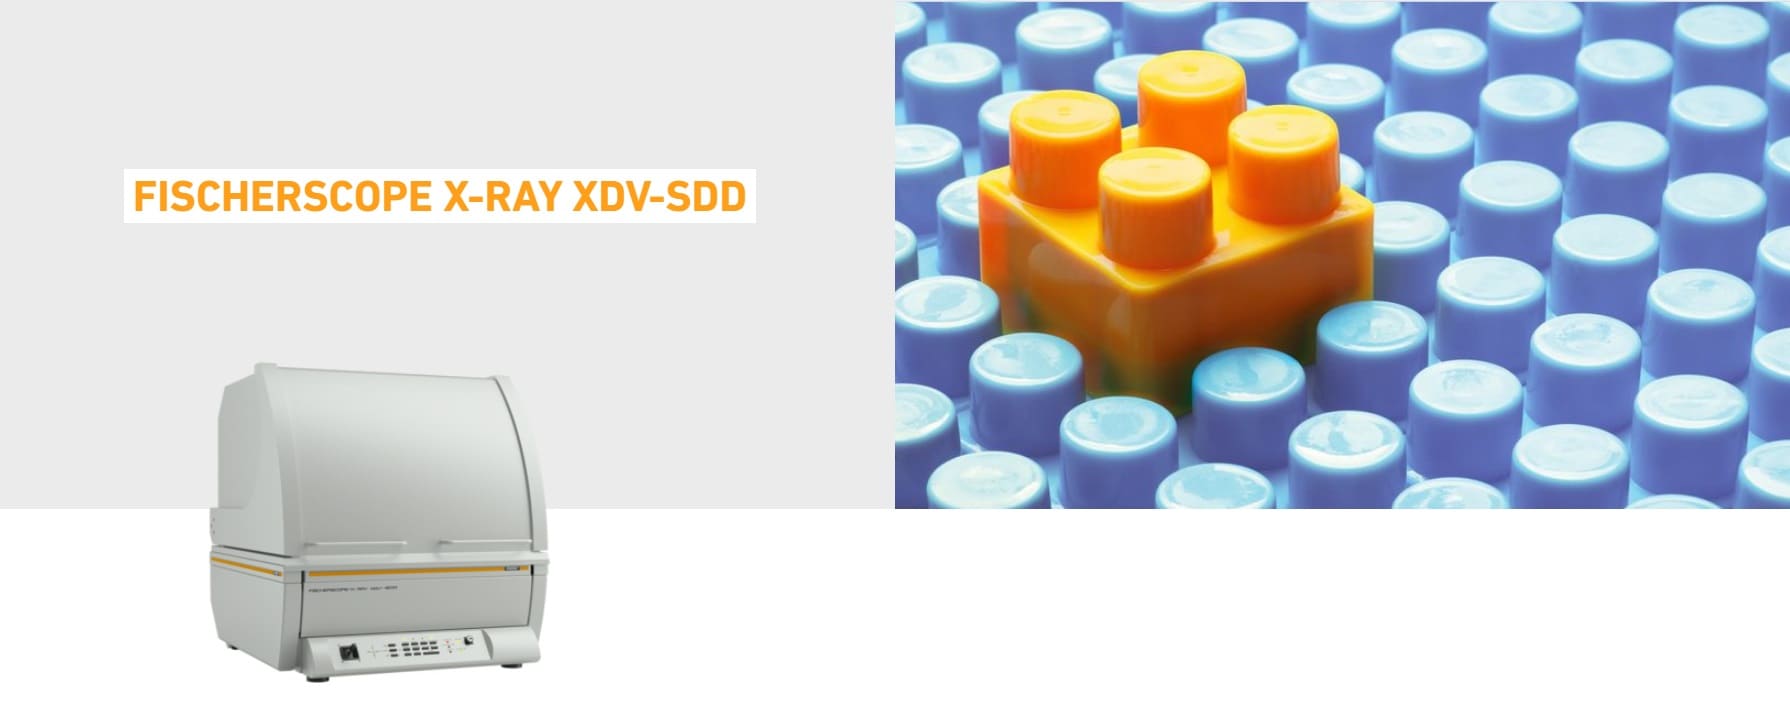 FISCHERSCOPE X-RAY XDV-SDD